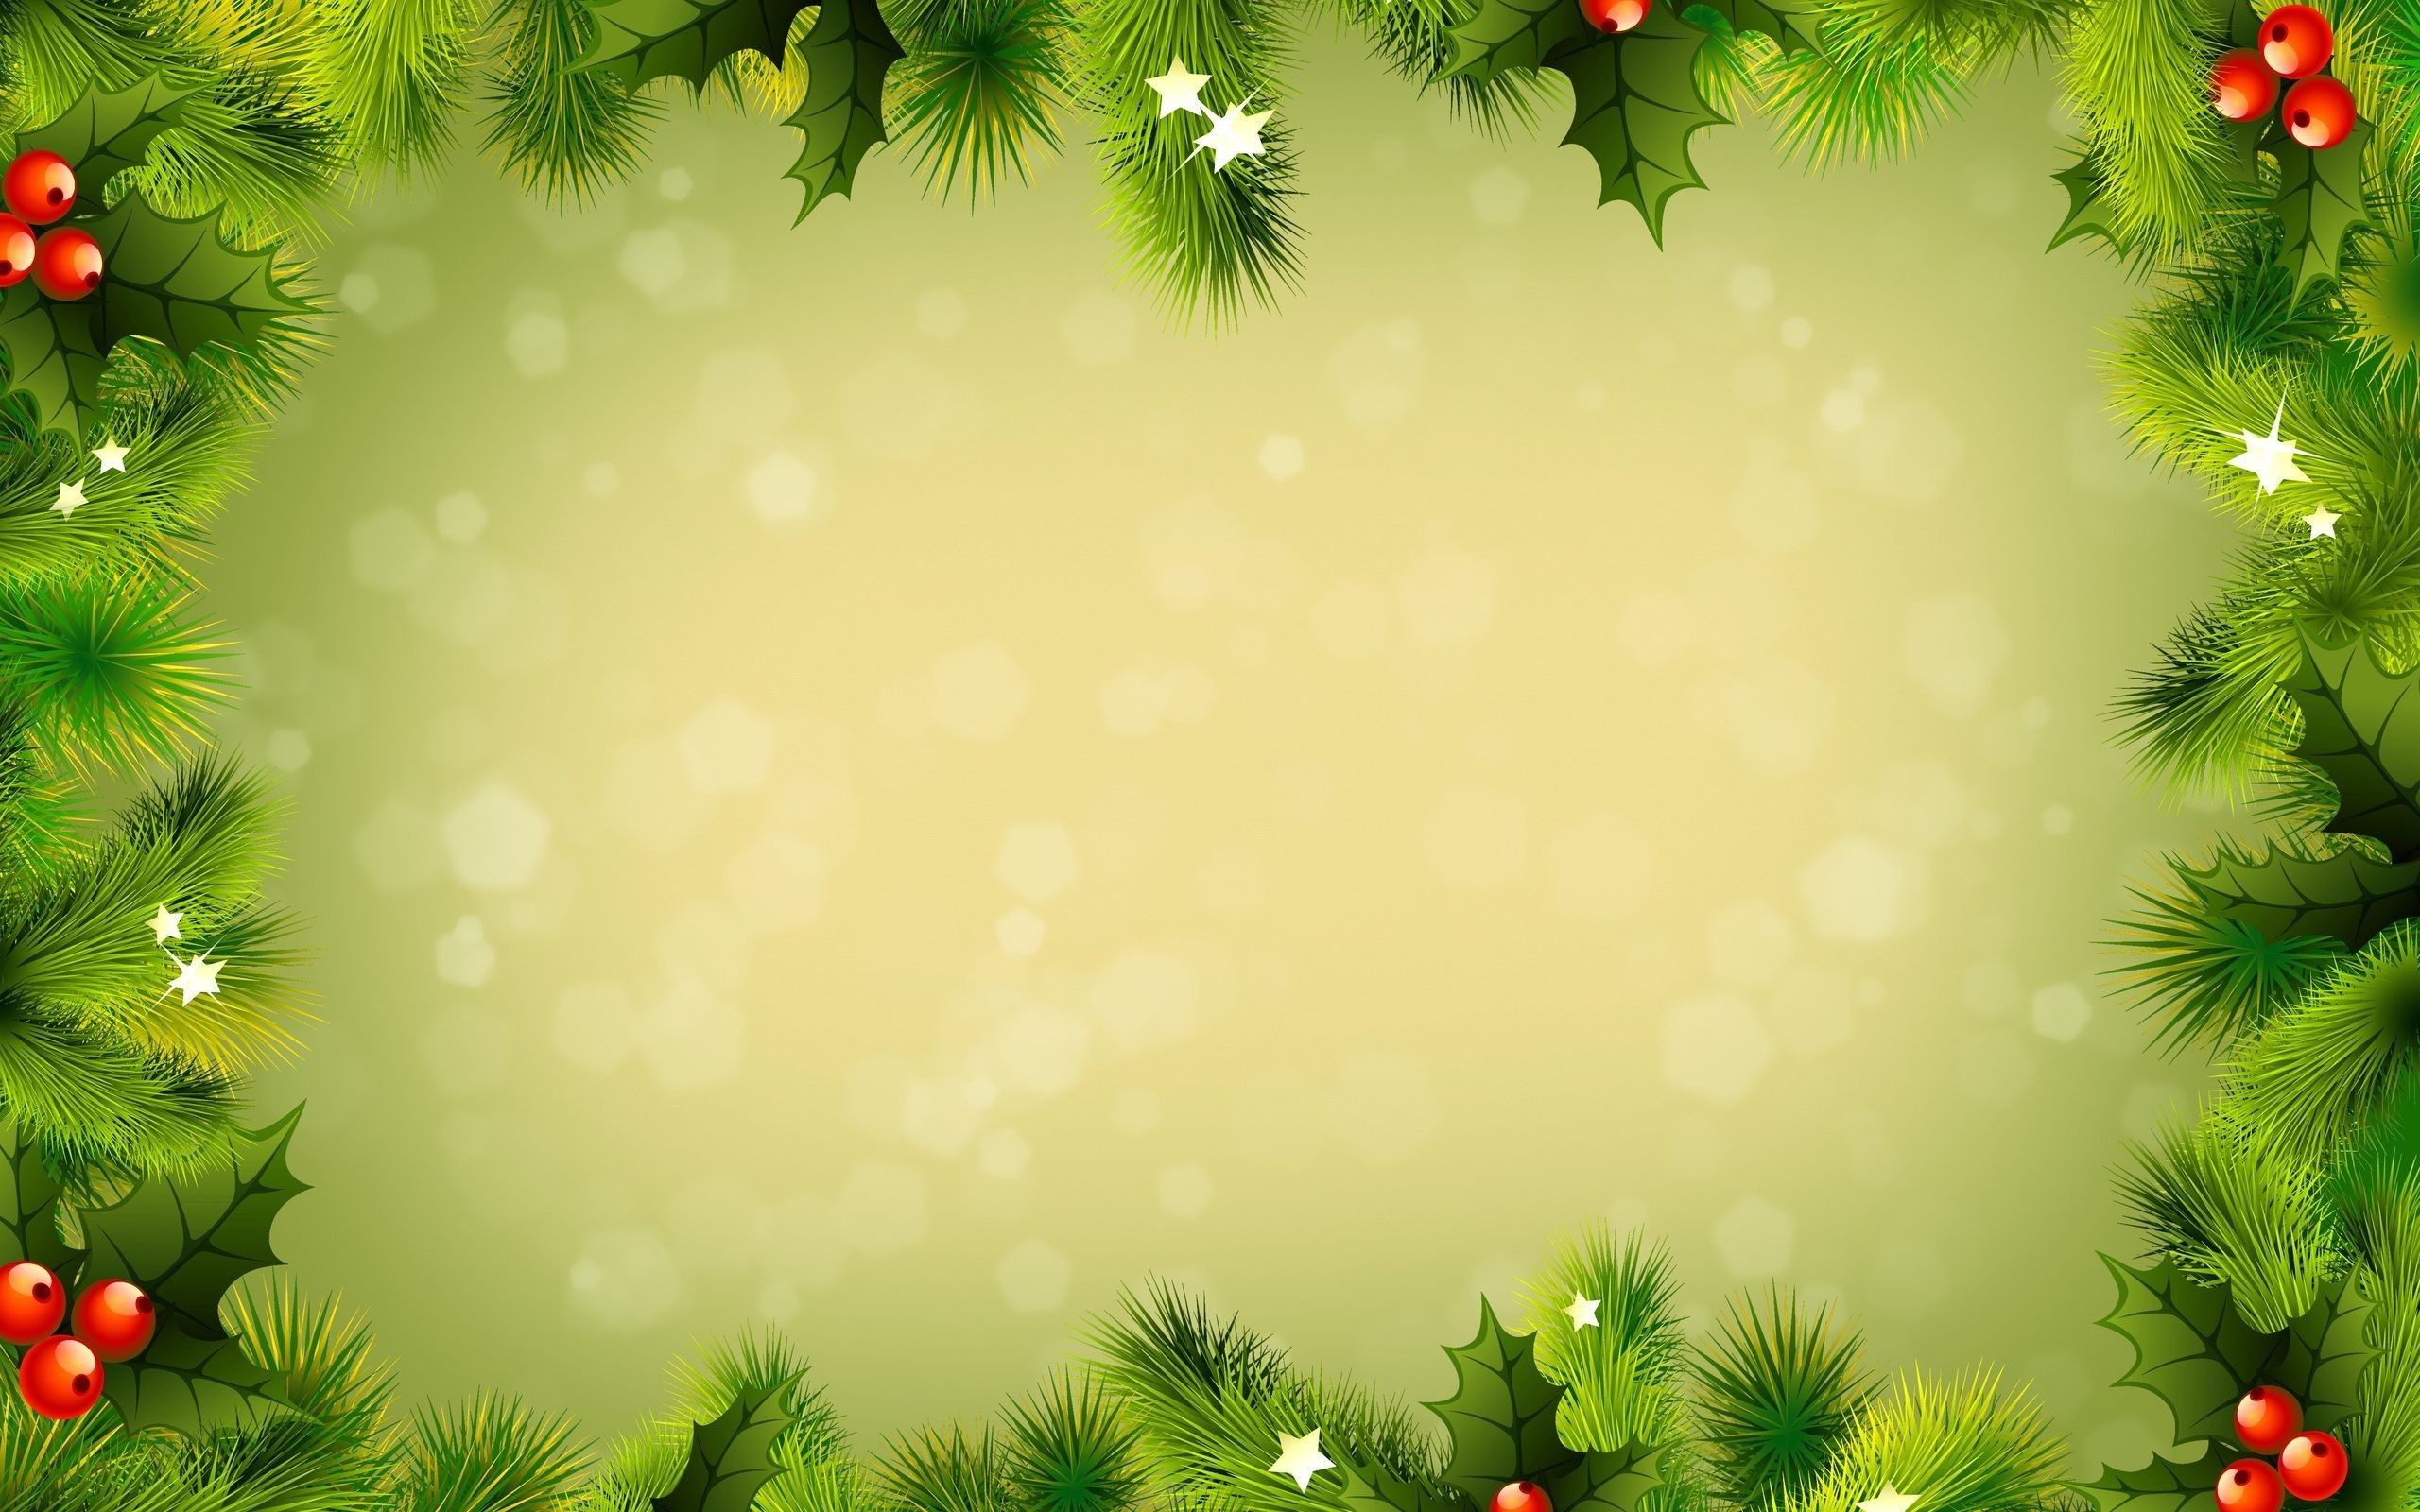 Red And Green Christmas Desktop Wallpaper